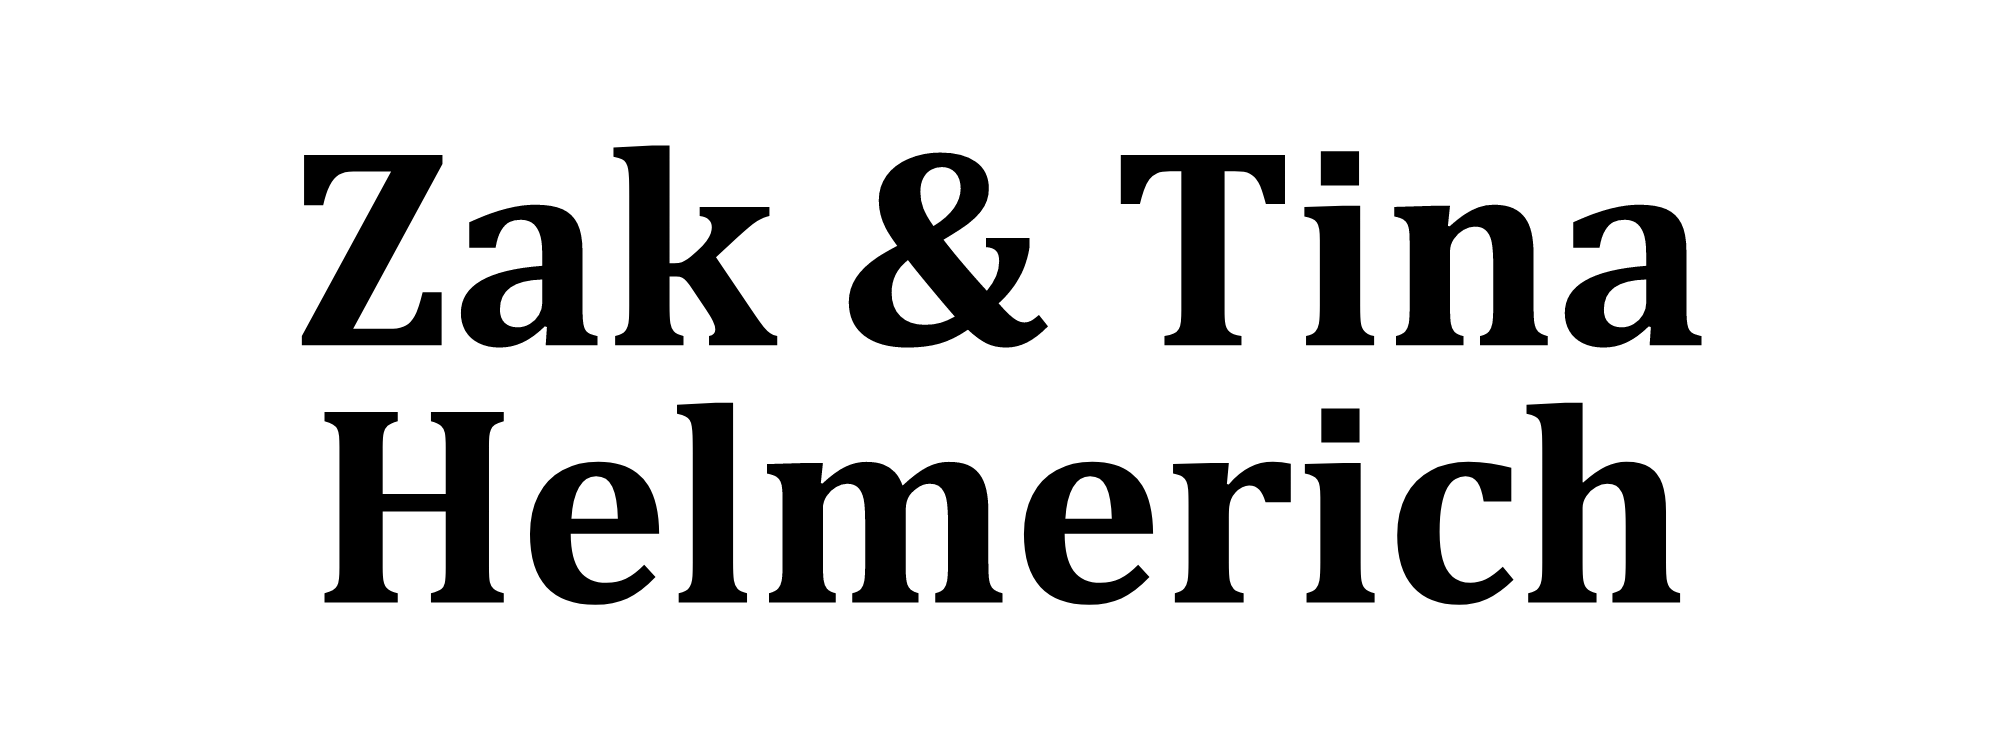 Zak and Tina Helmerich logo.png